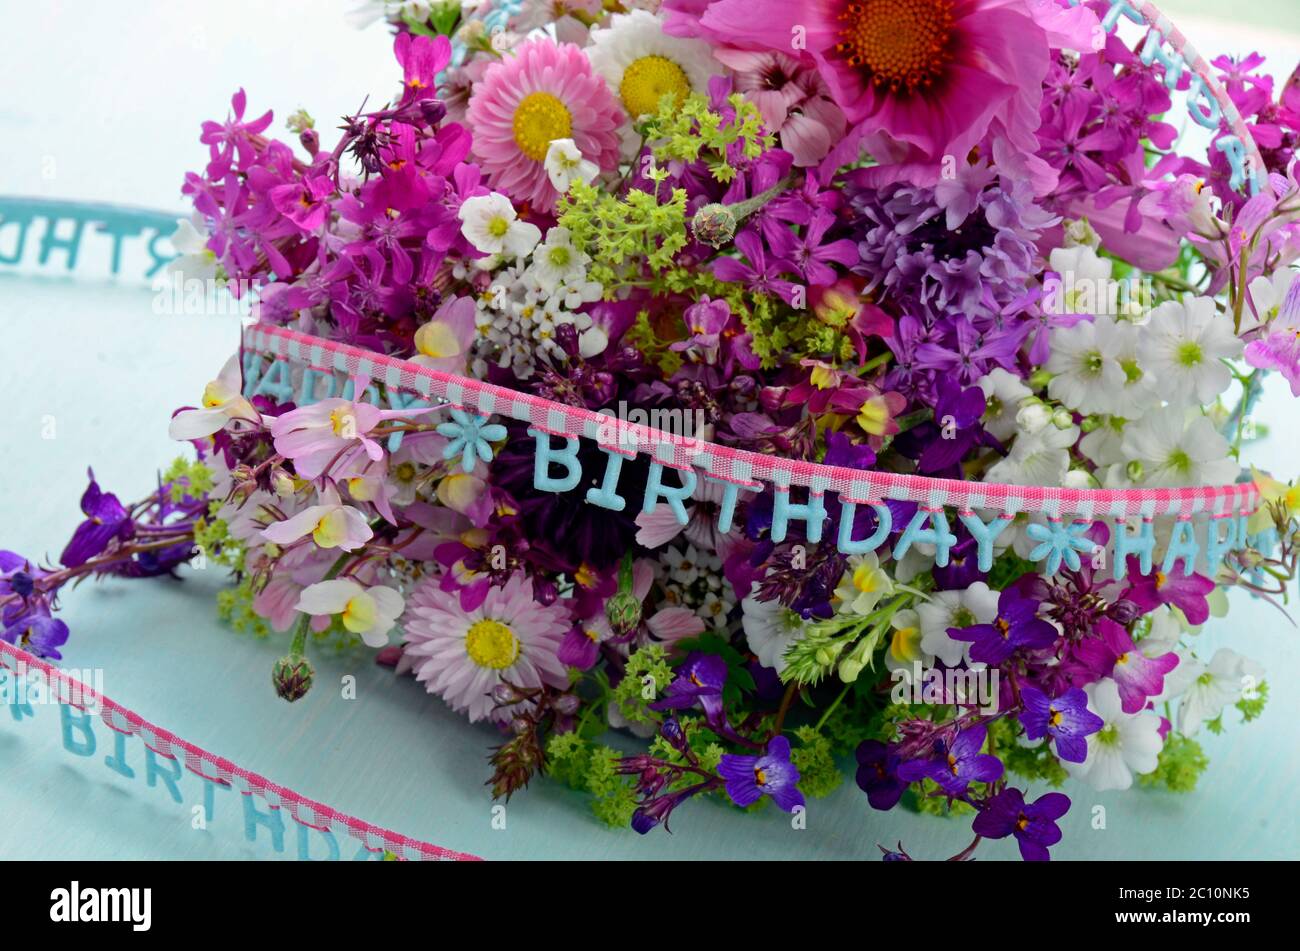 Birthday-bouquet with summerflowers Stock Photo